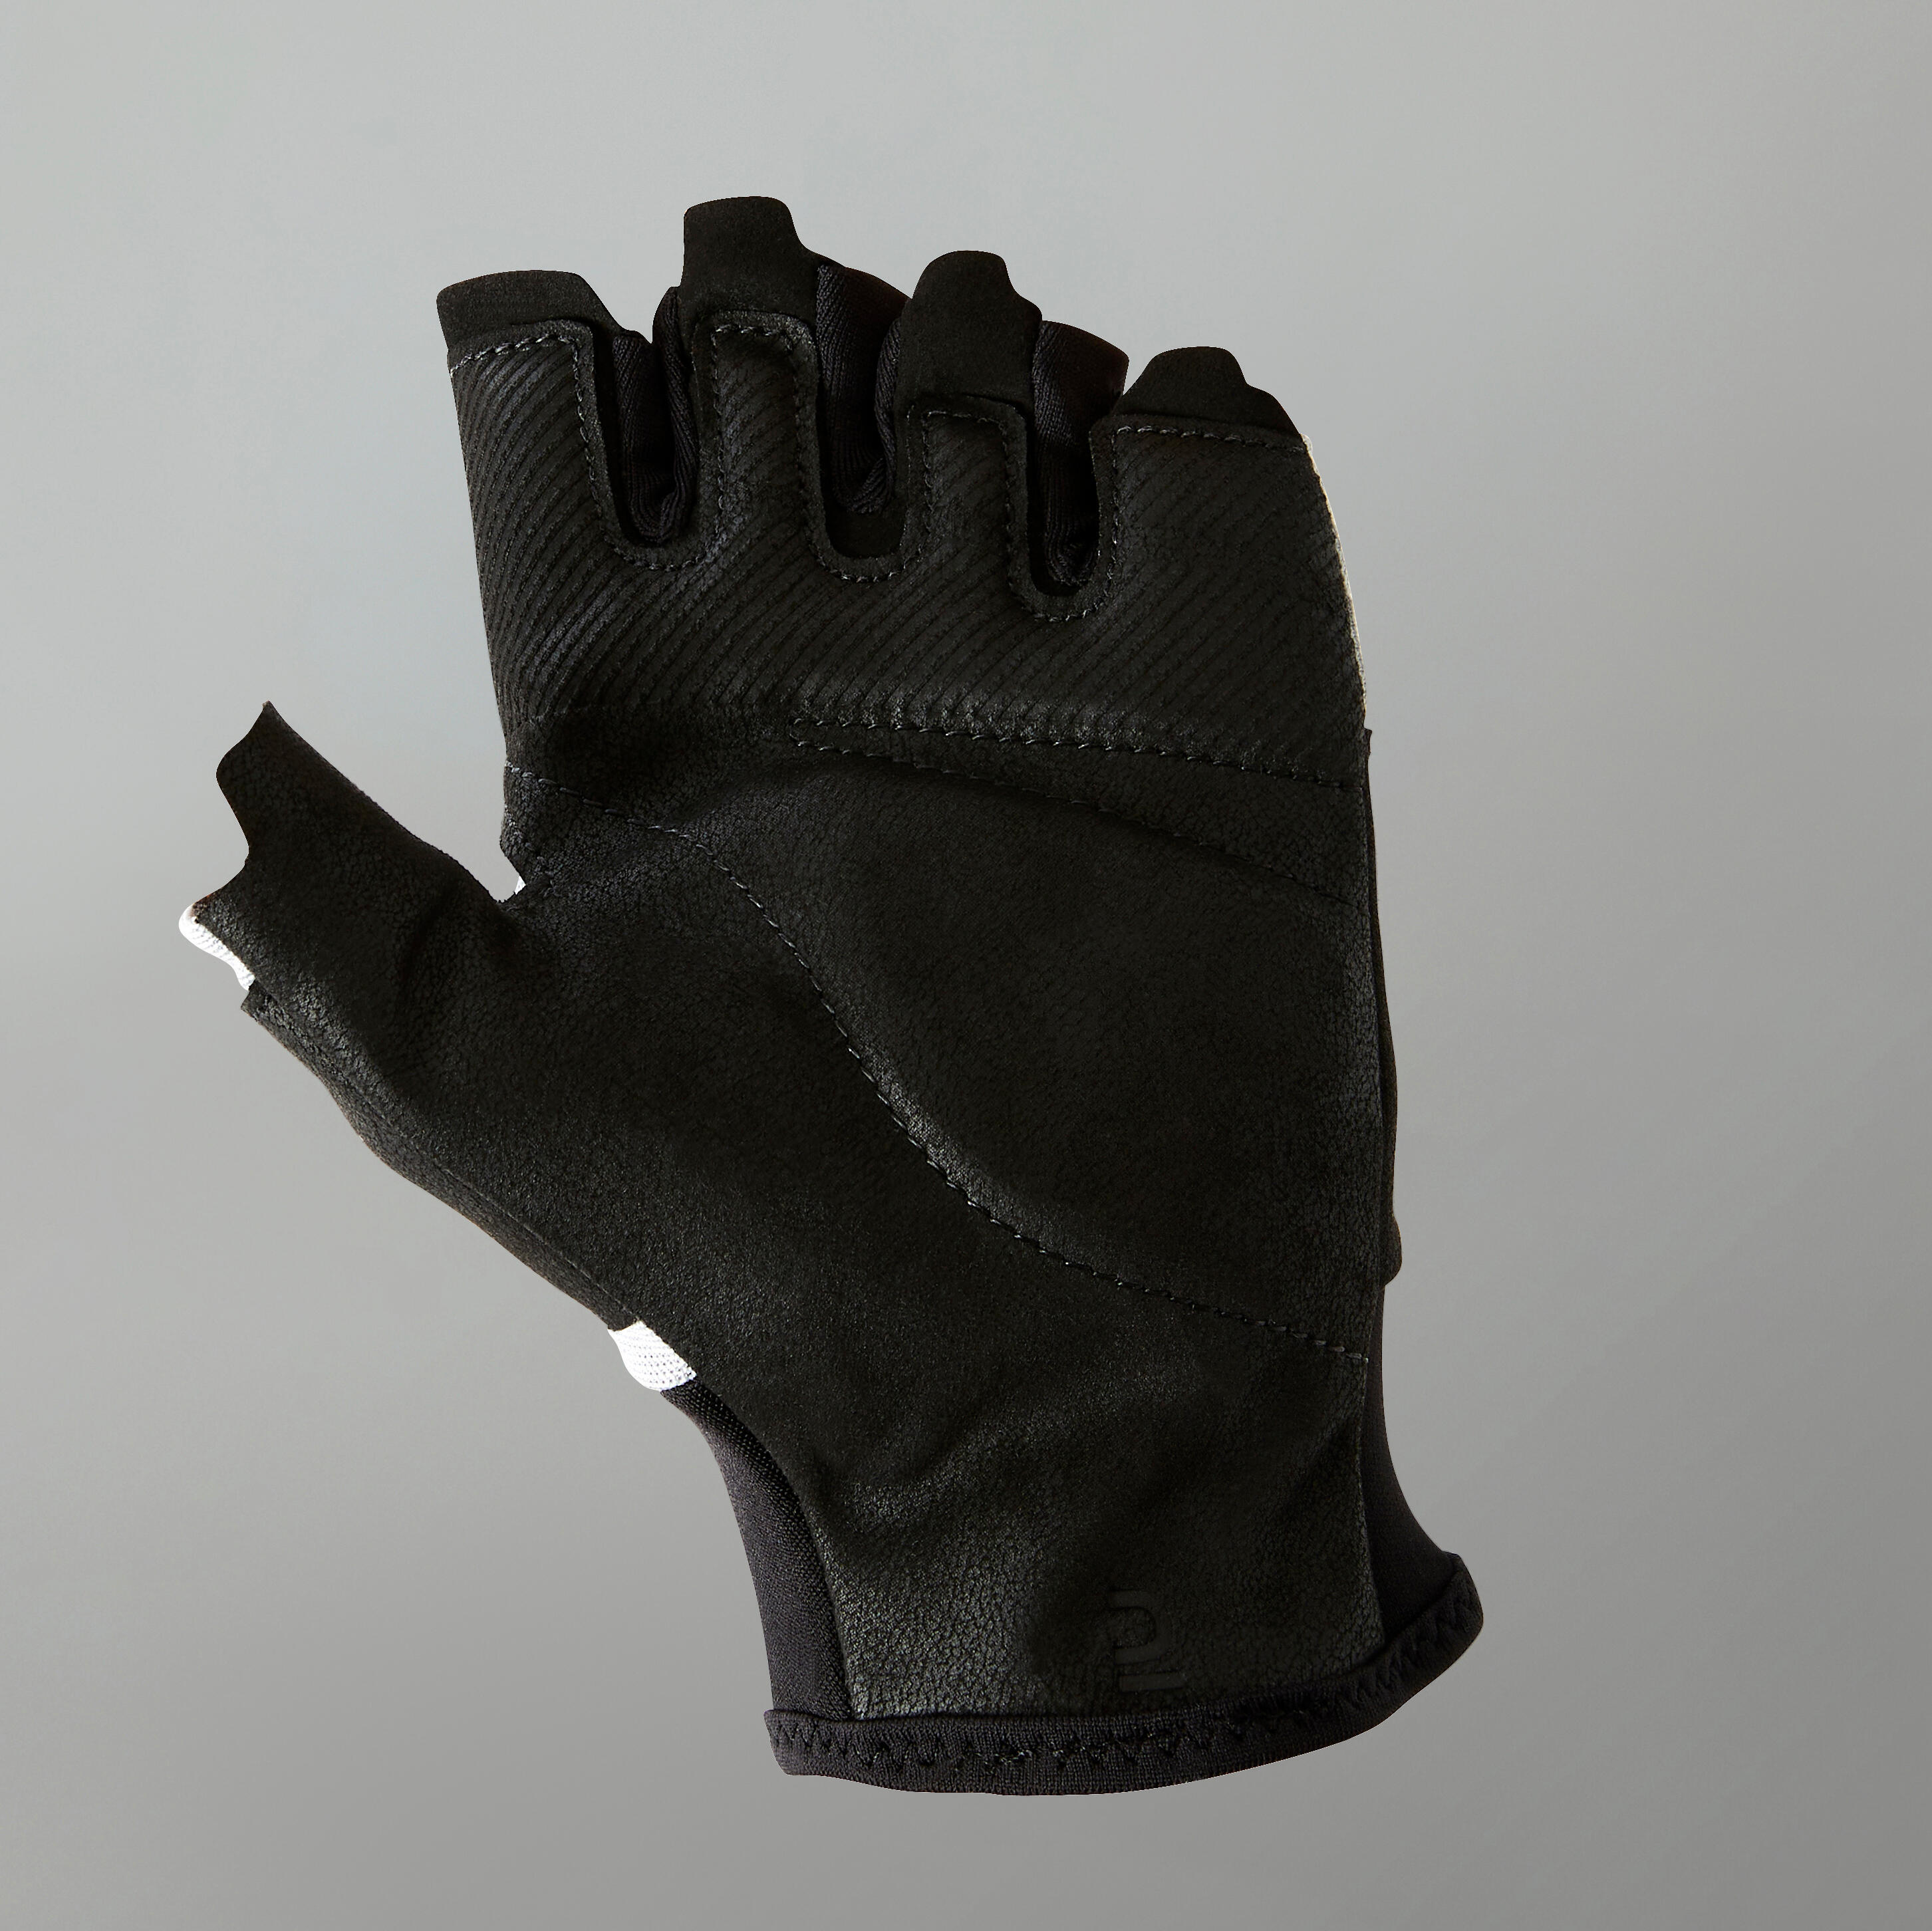 Weight Training Comfort Gloves - Grey 2/3